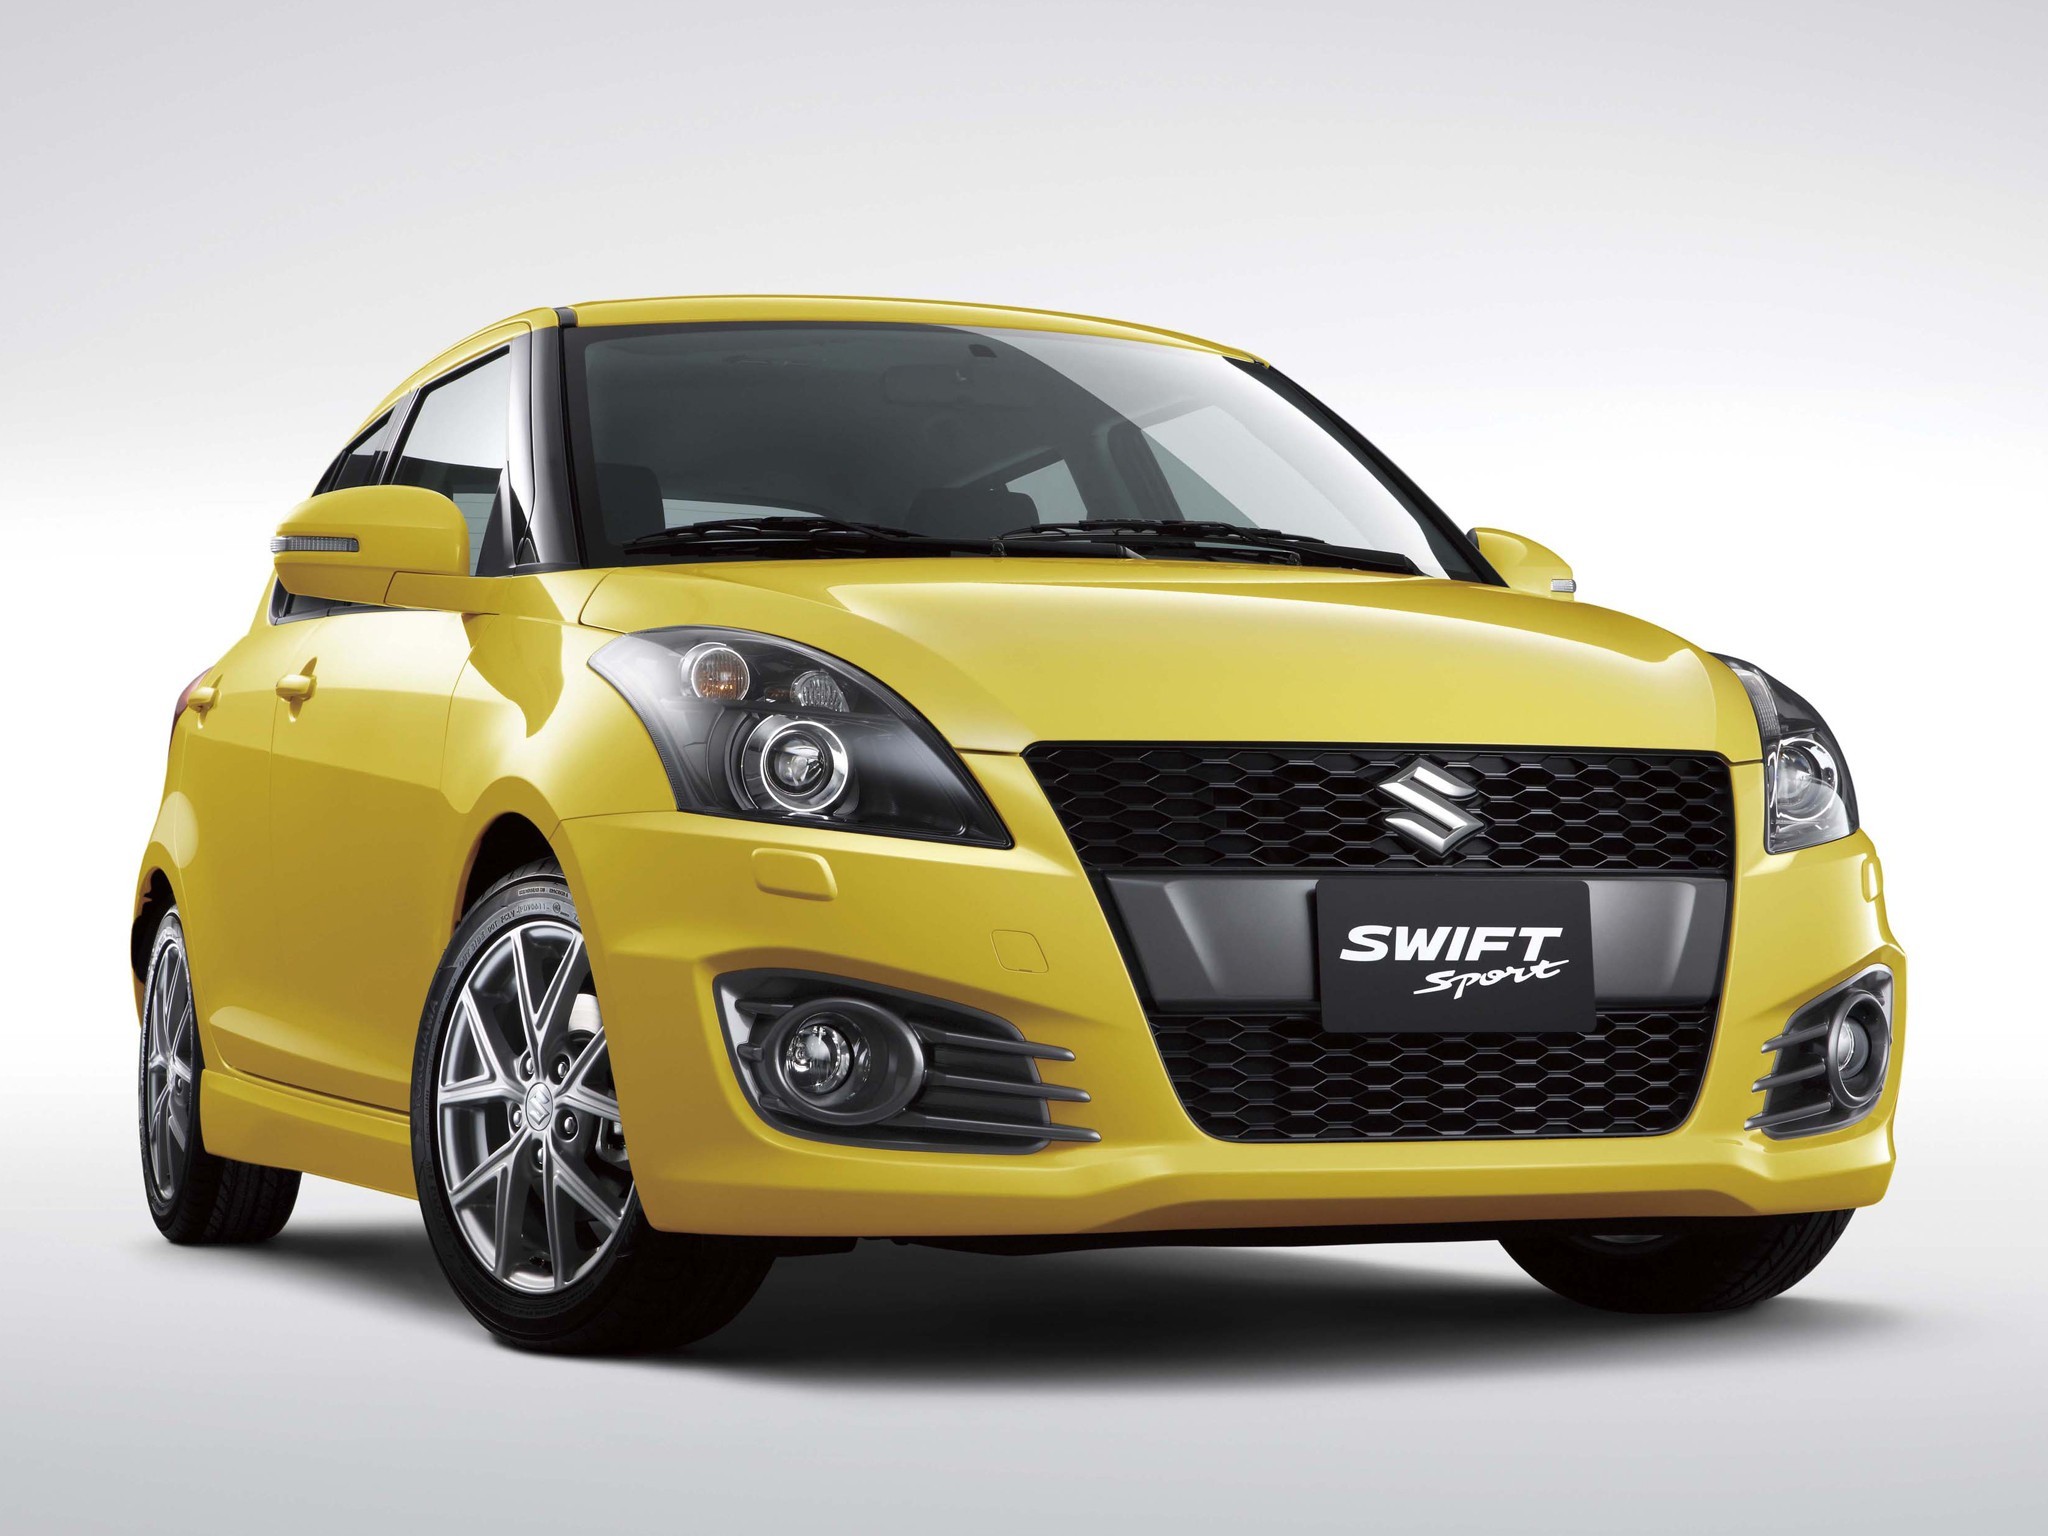 Suzuki Swift Production Reaches 5 Million Units in 11 Years - autoevolution